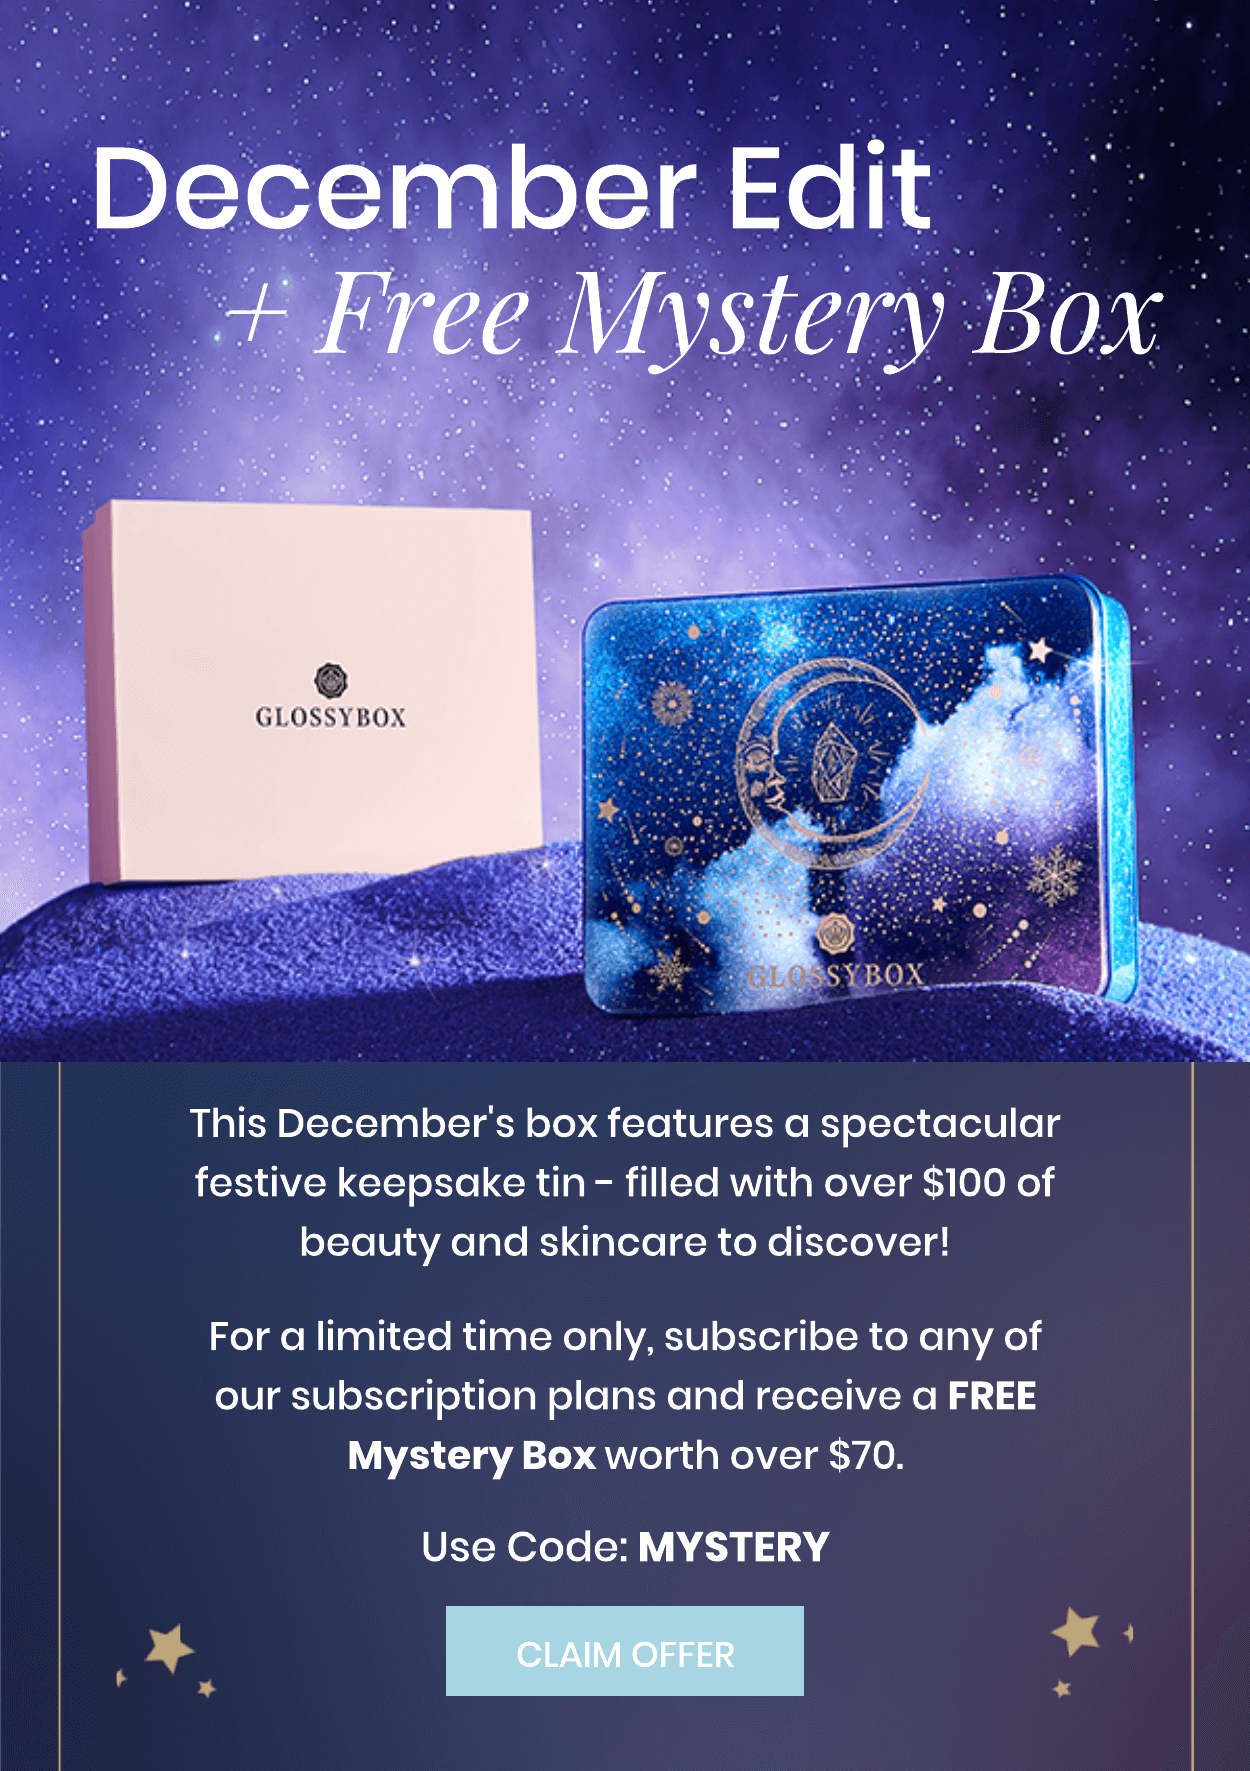 GLOSSYBOX Coupon Code – Free Mystery Box!